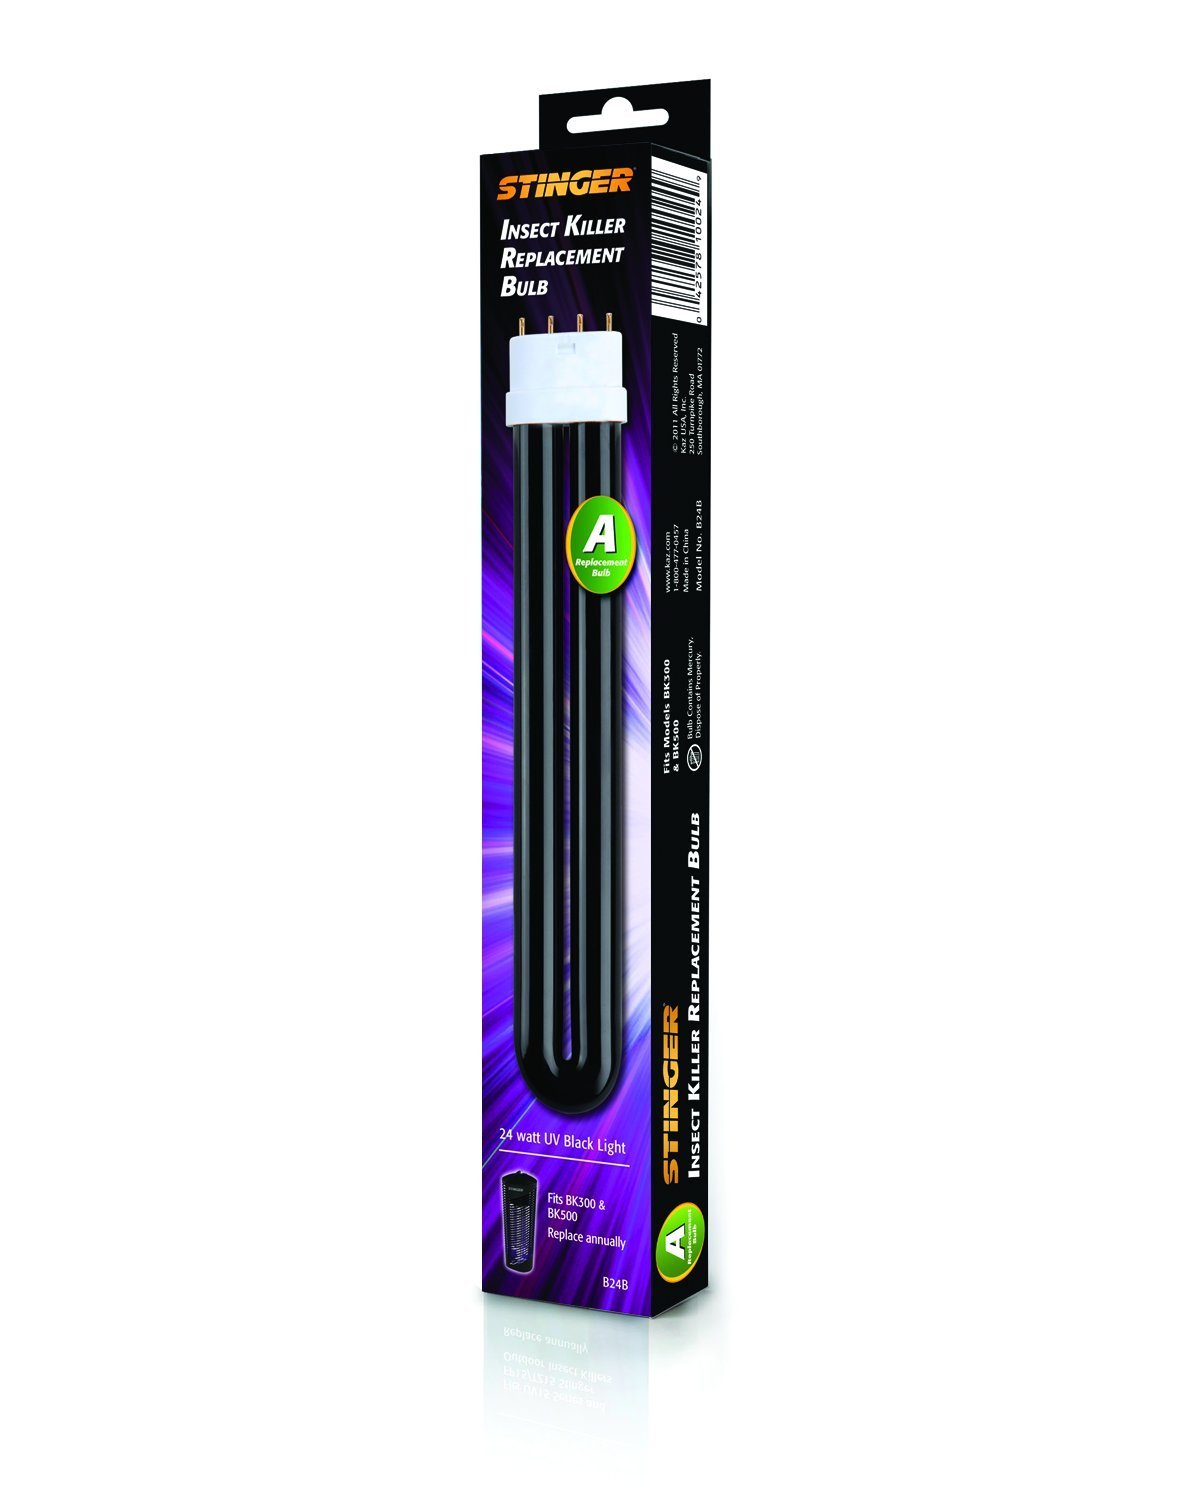 Stinger® B24B Replacement UV Light Bulb for Insect Killer, Black, 24W